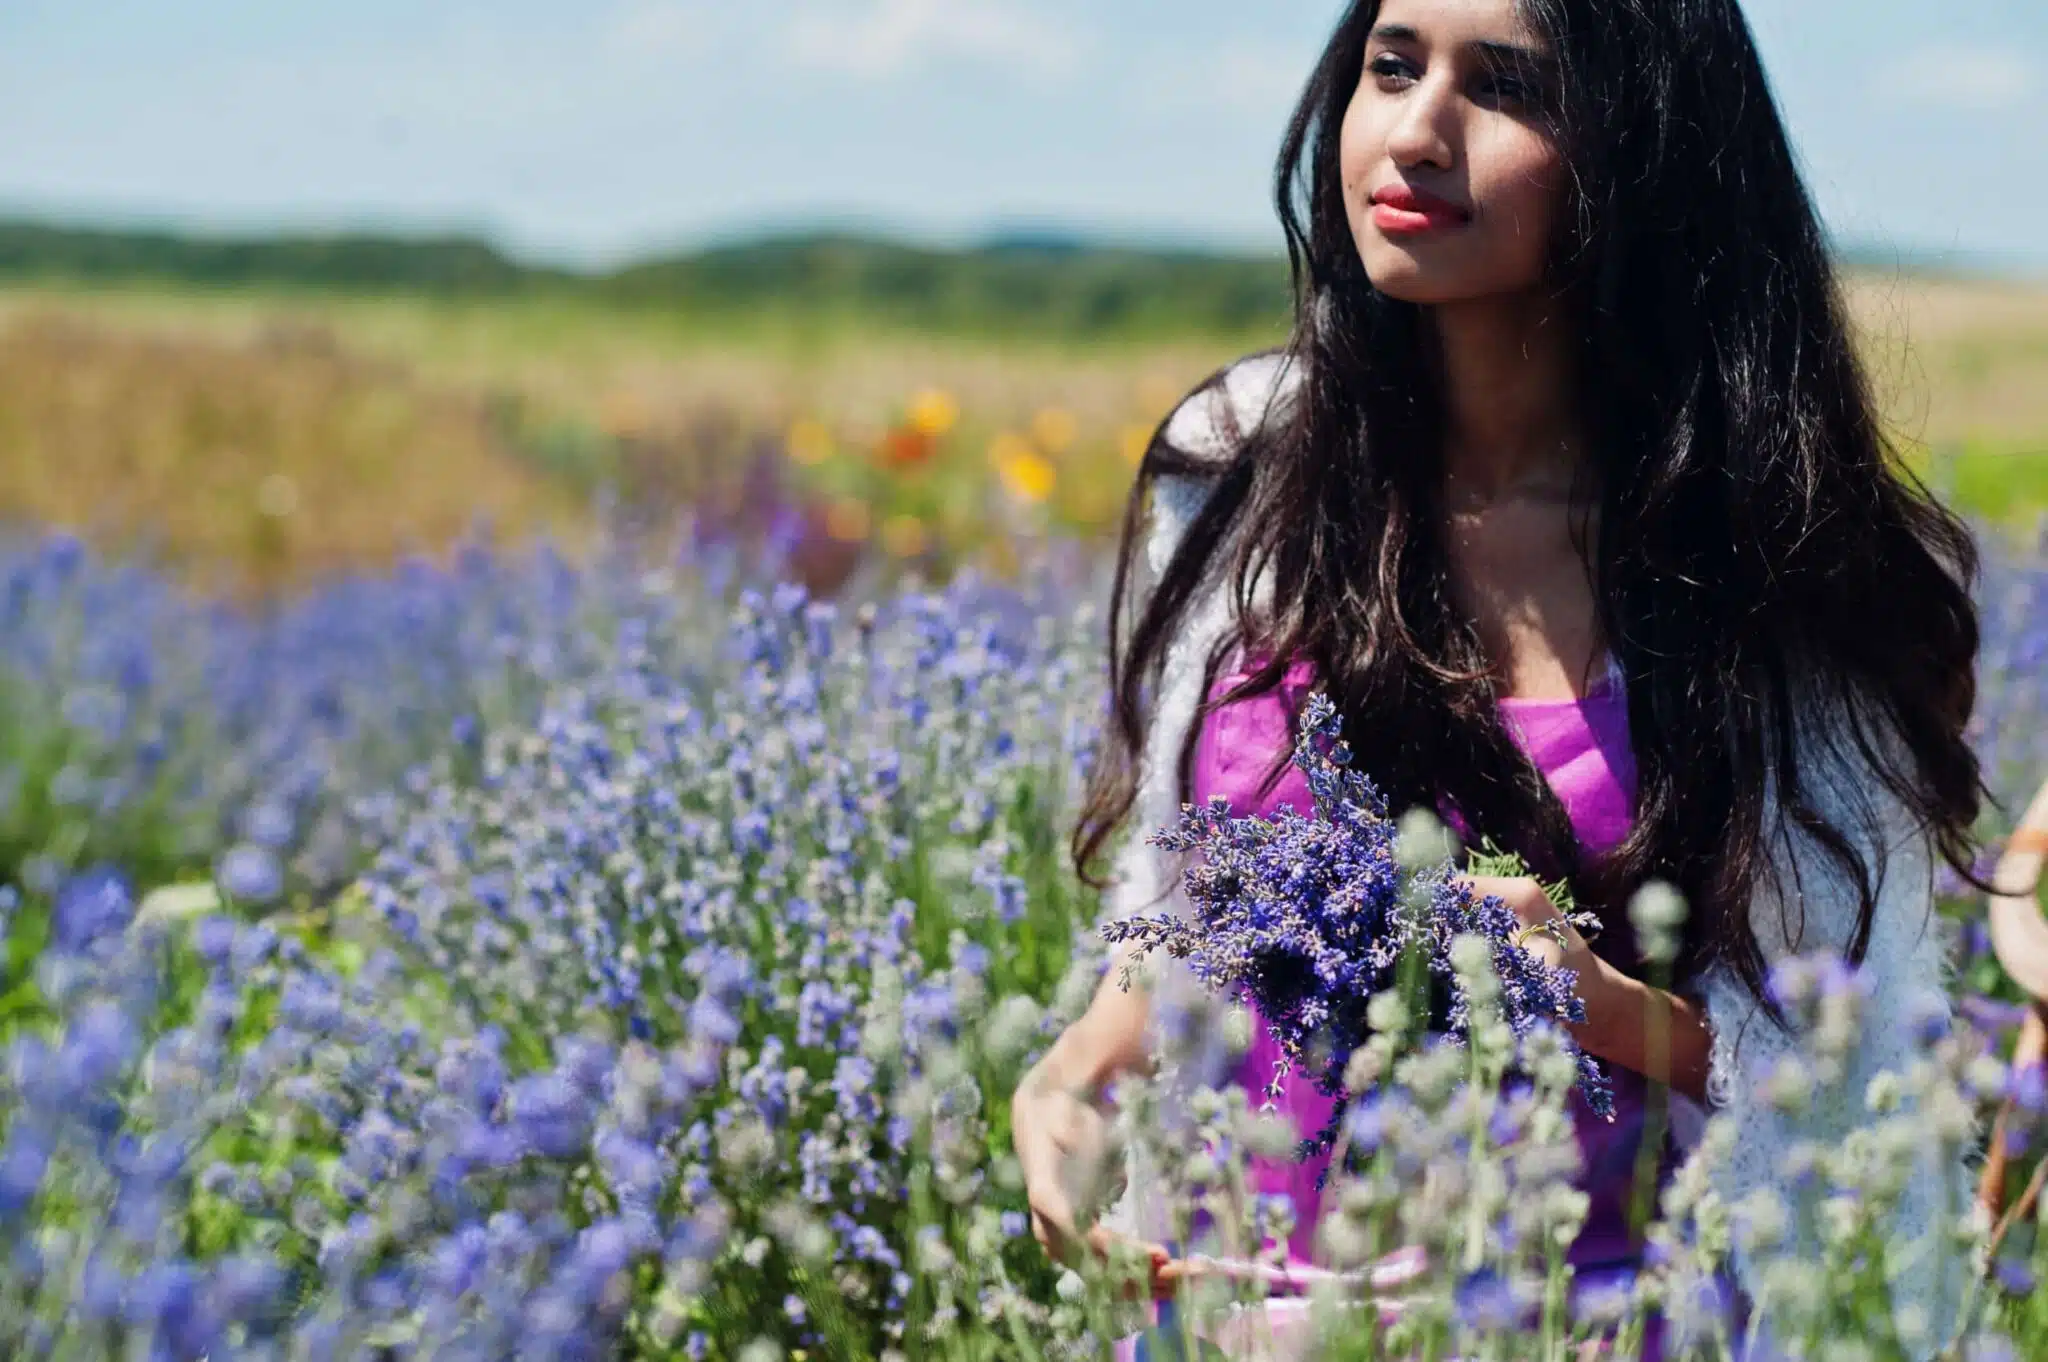 Beautiful indian girl in traditonal saree in a field of purple flowers